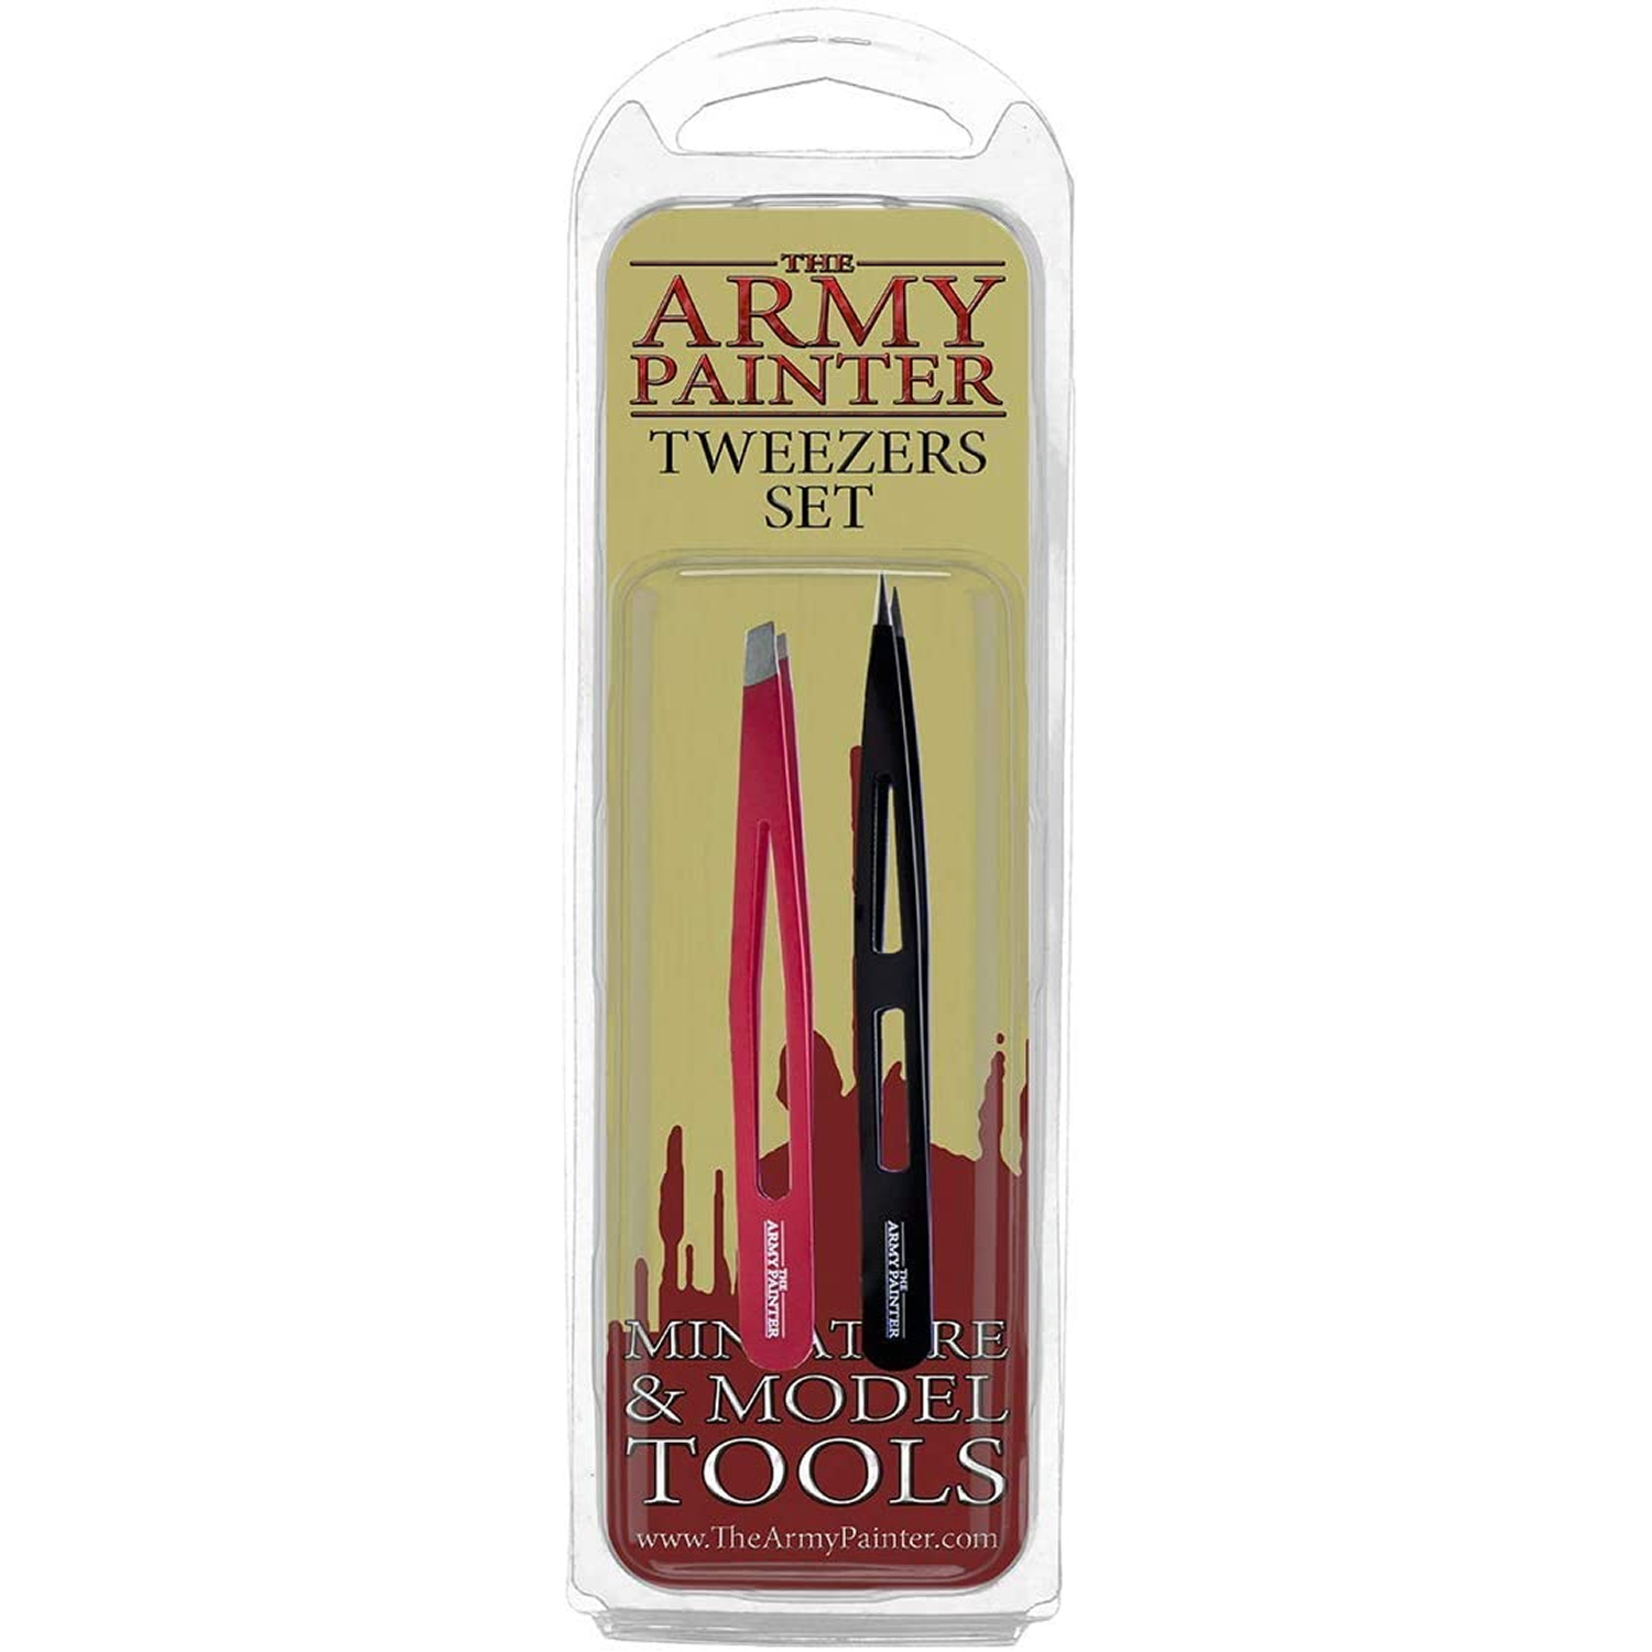 Army Painter Army Painter Tools Tweezers Set